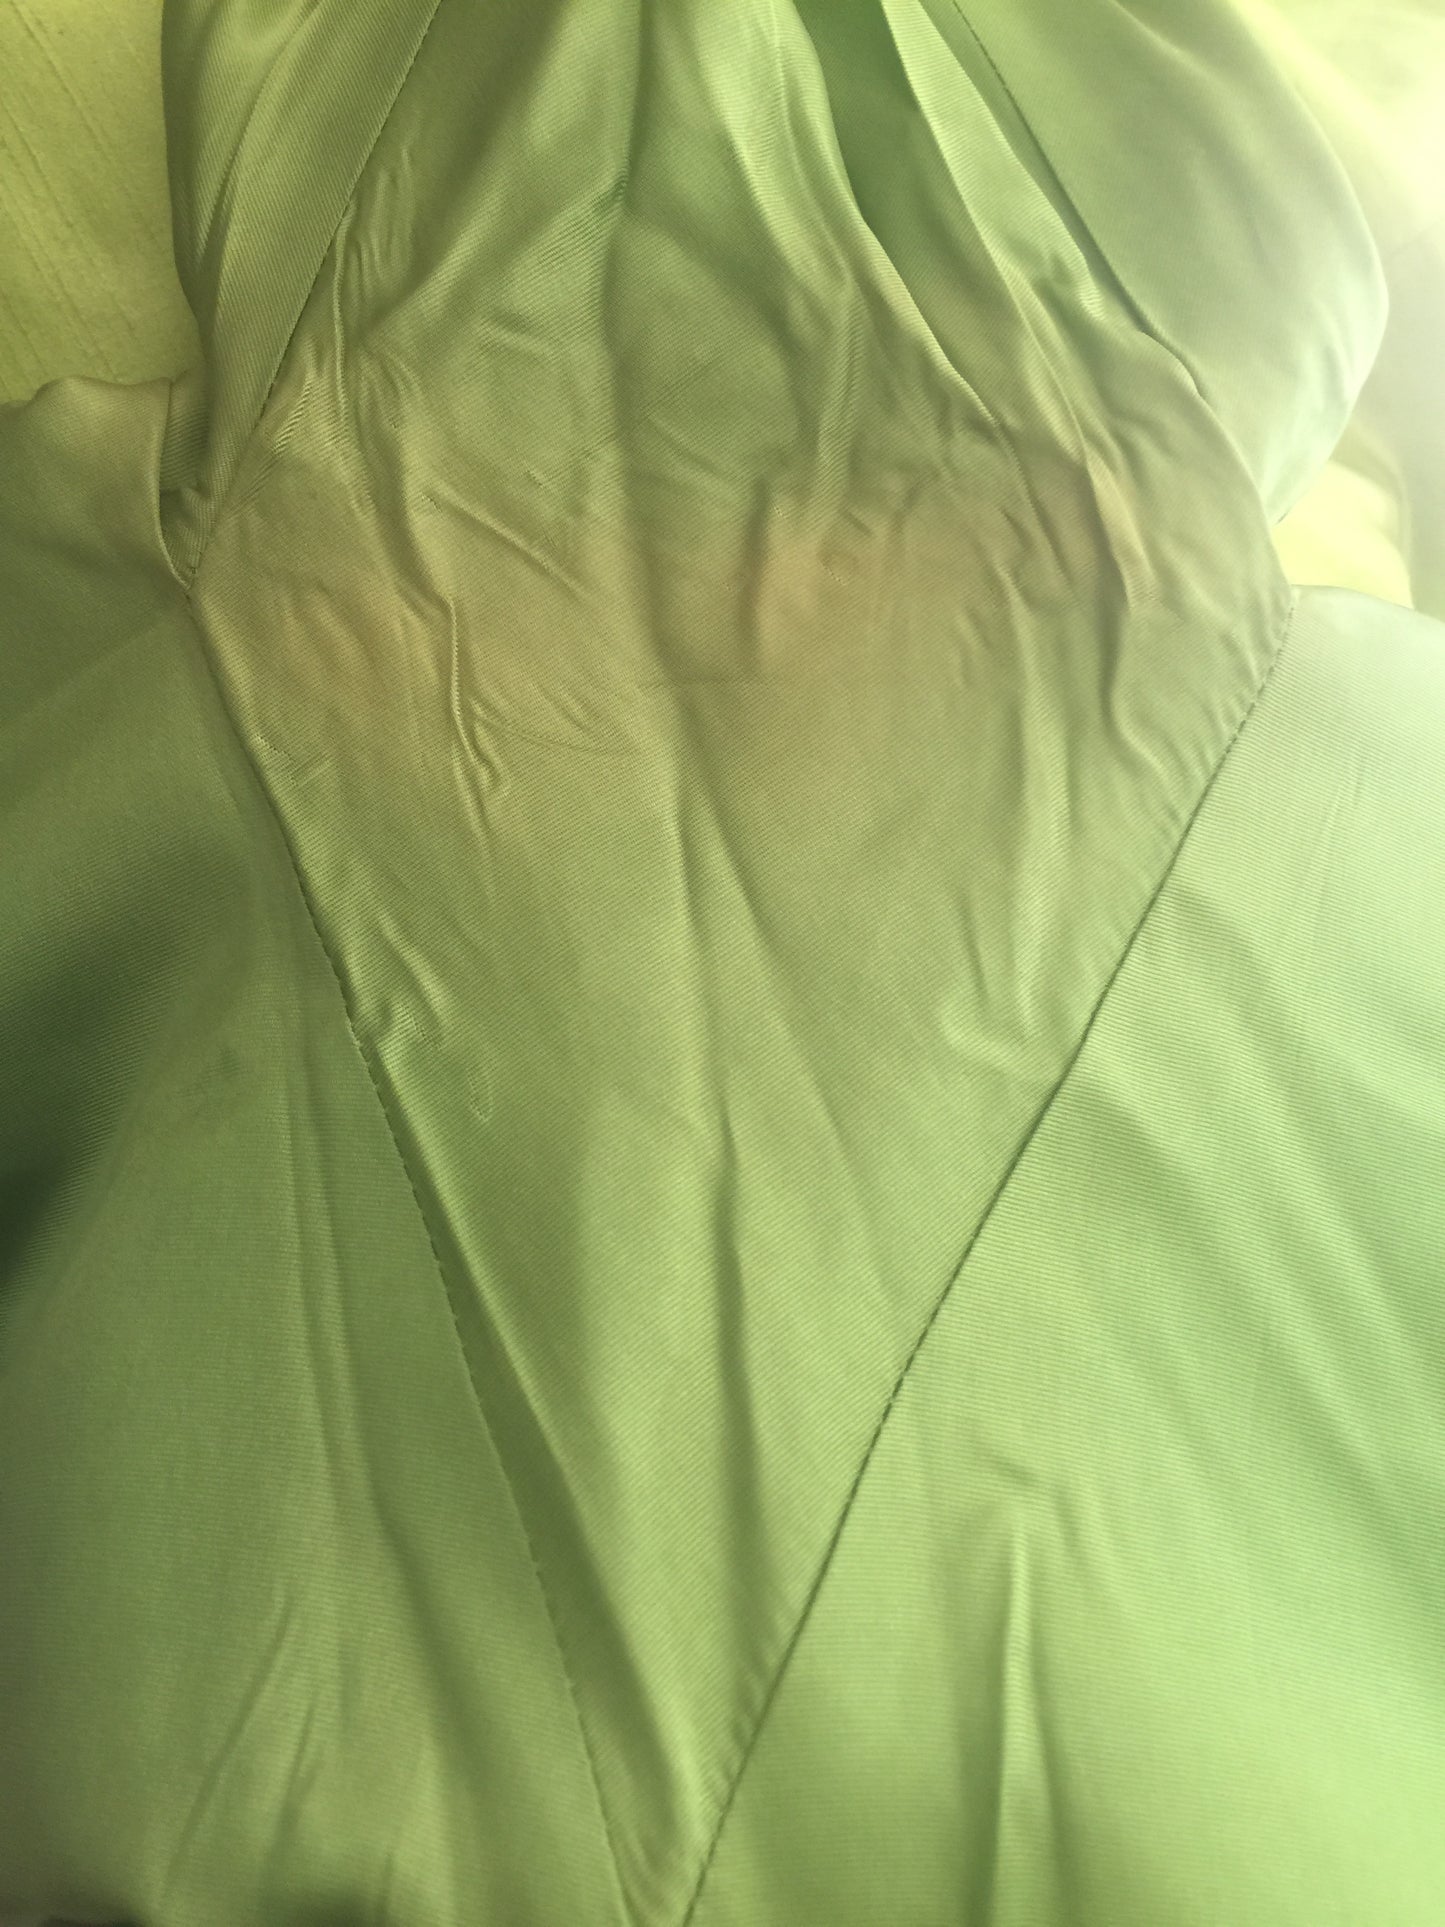 Green silk full length dress set